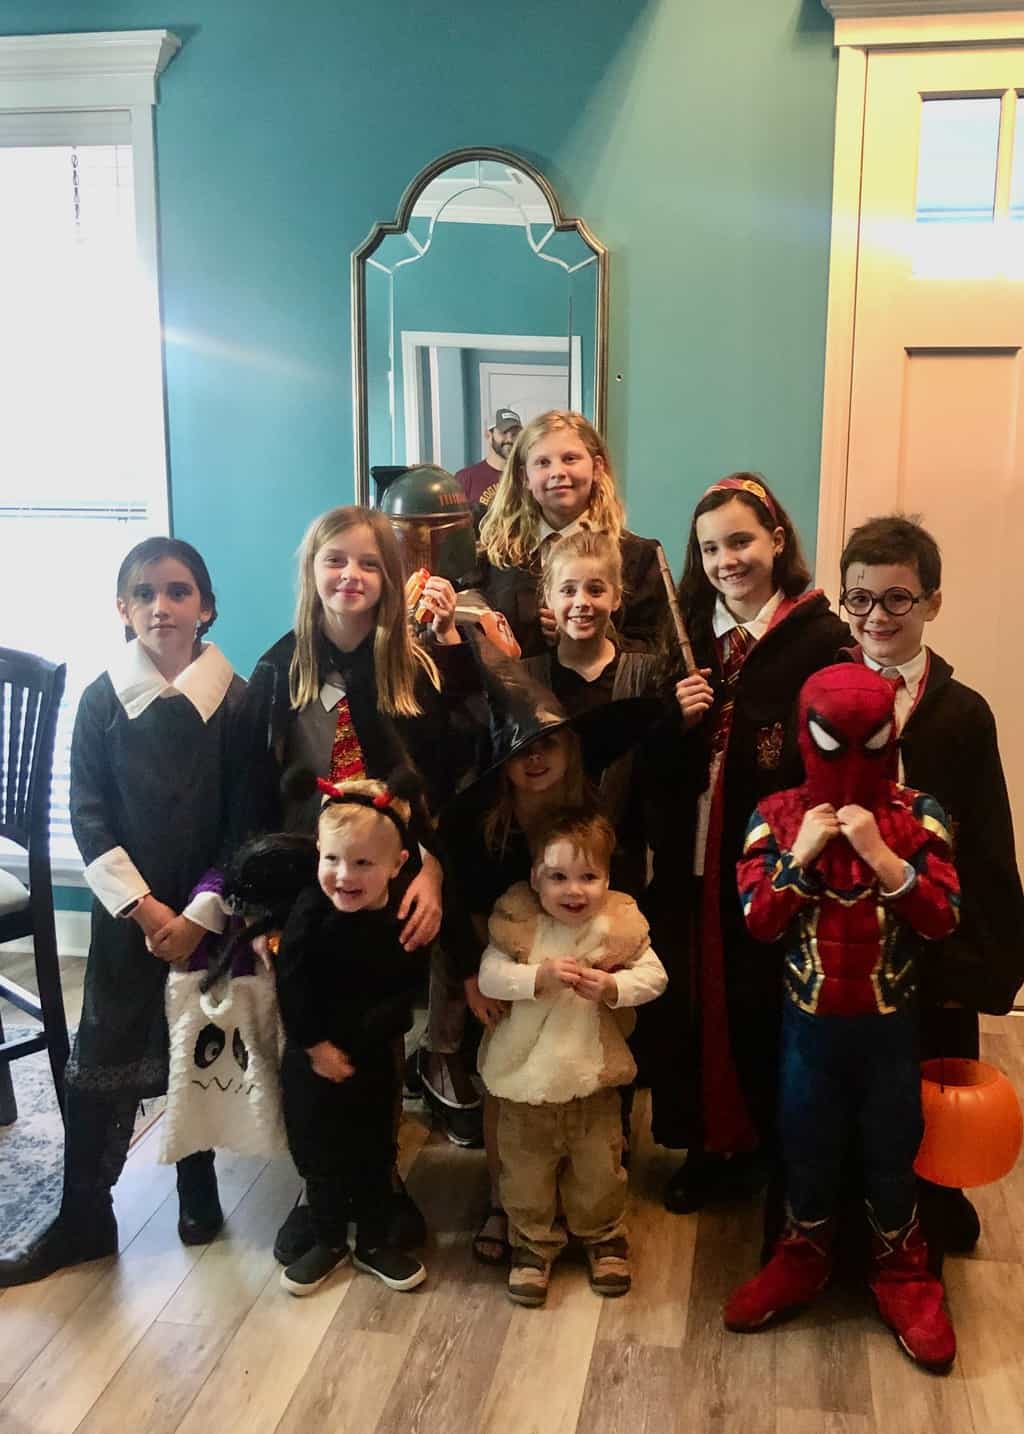 Halloween 2019 - The Journey of Parenthood...